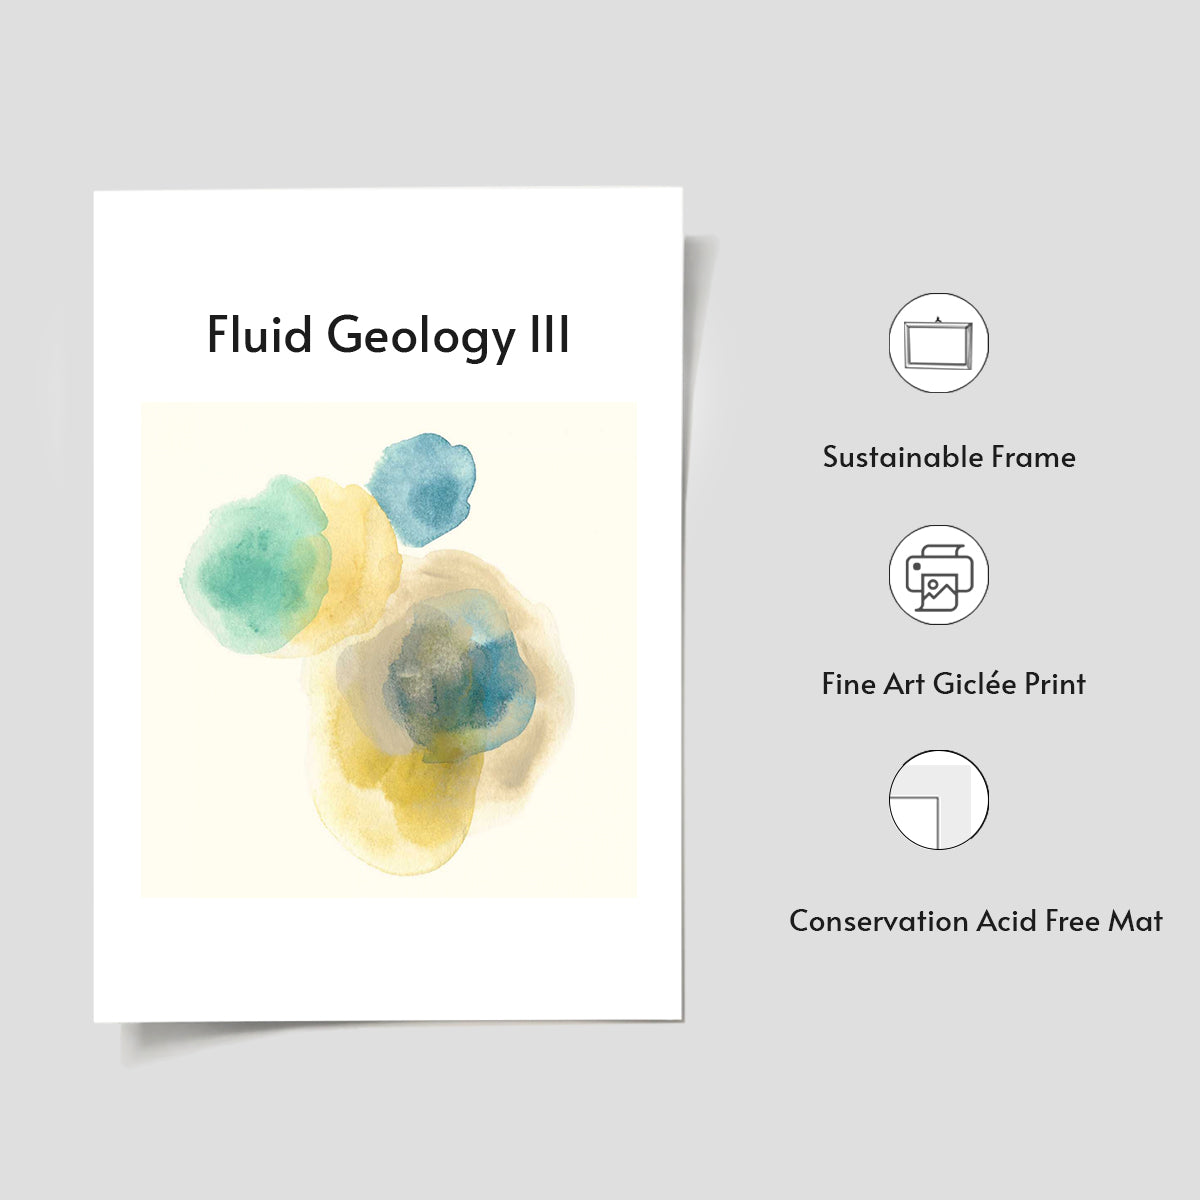 Fluid Geology III